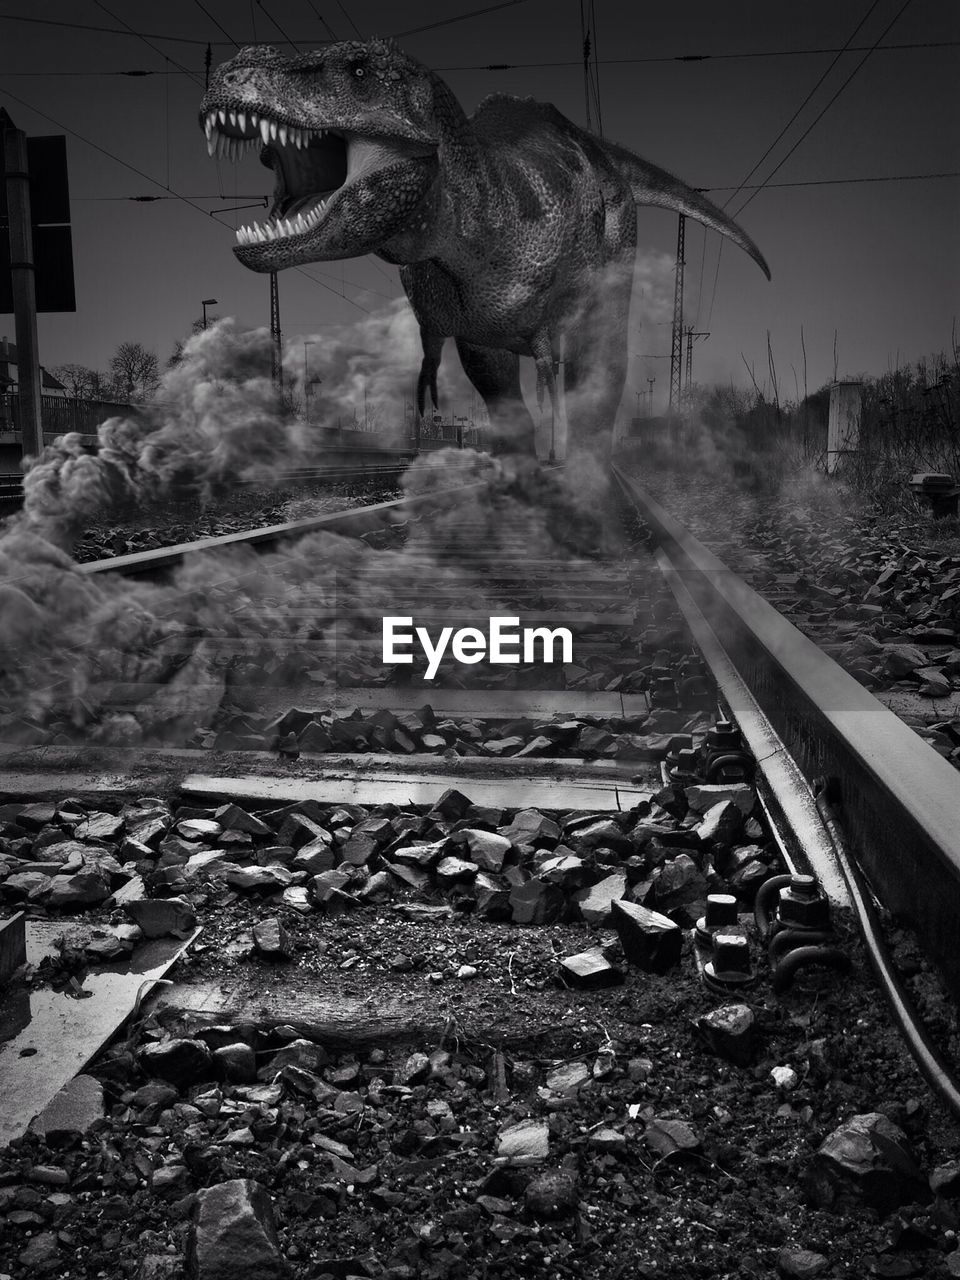 Tyrannosaurus rex on railroad tracks